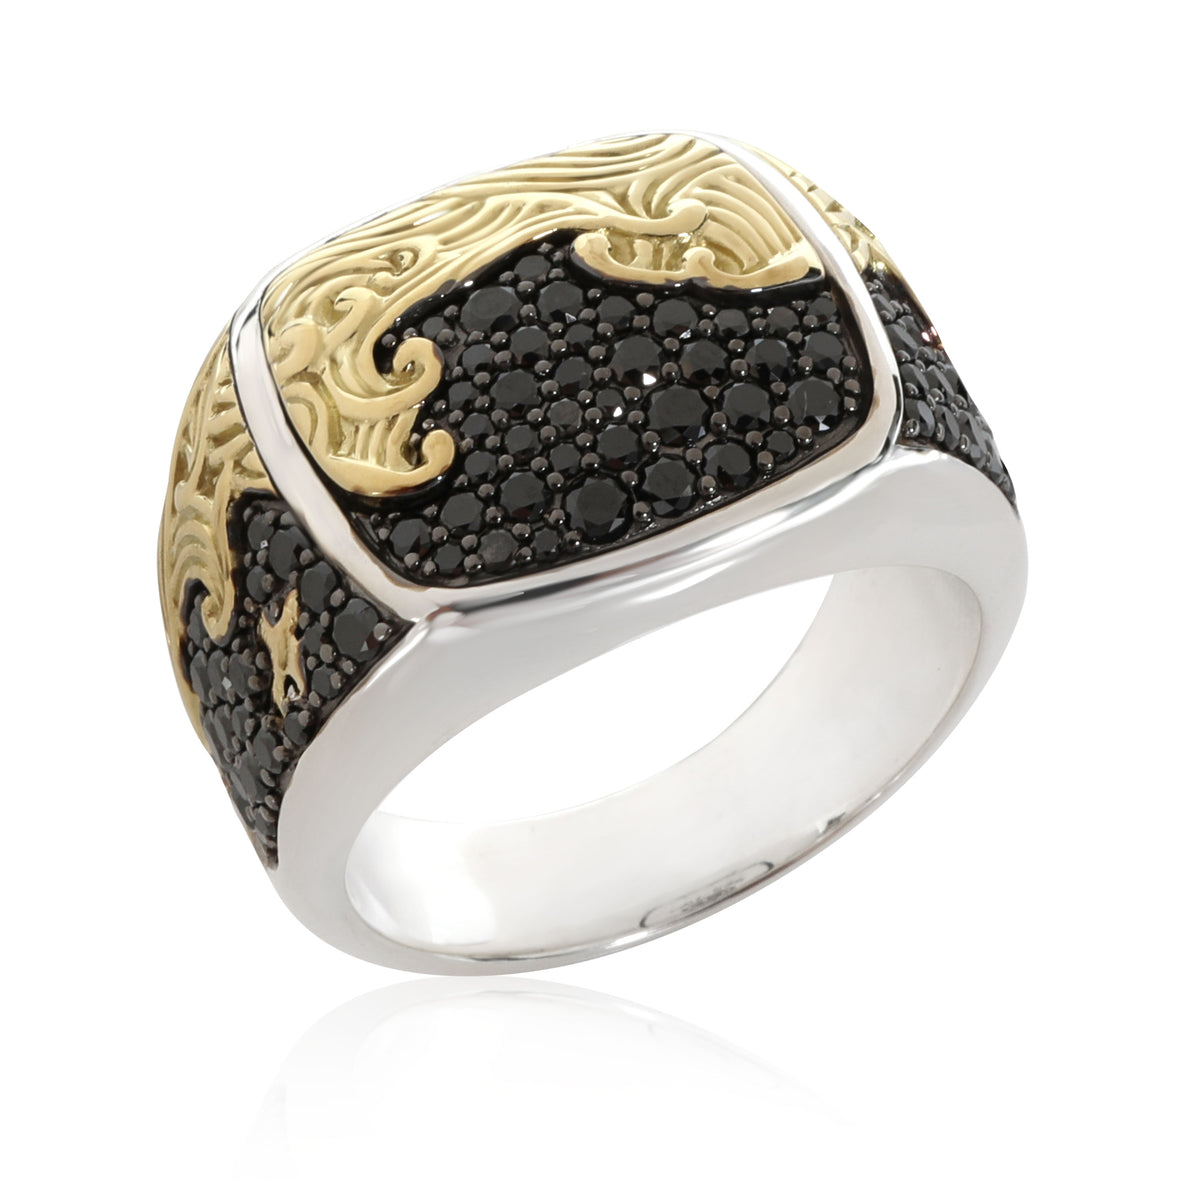 David Yurman Waves Black Diamond Ring in 18K Yellow Gold/Sterling Silver 1.67